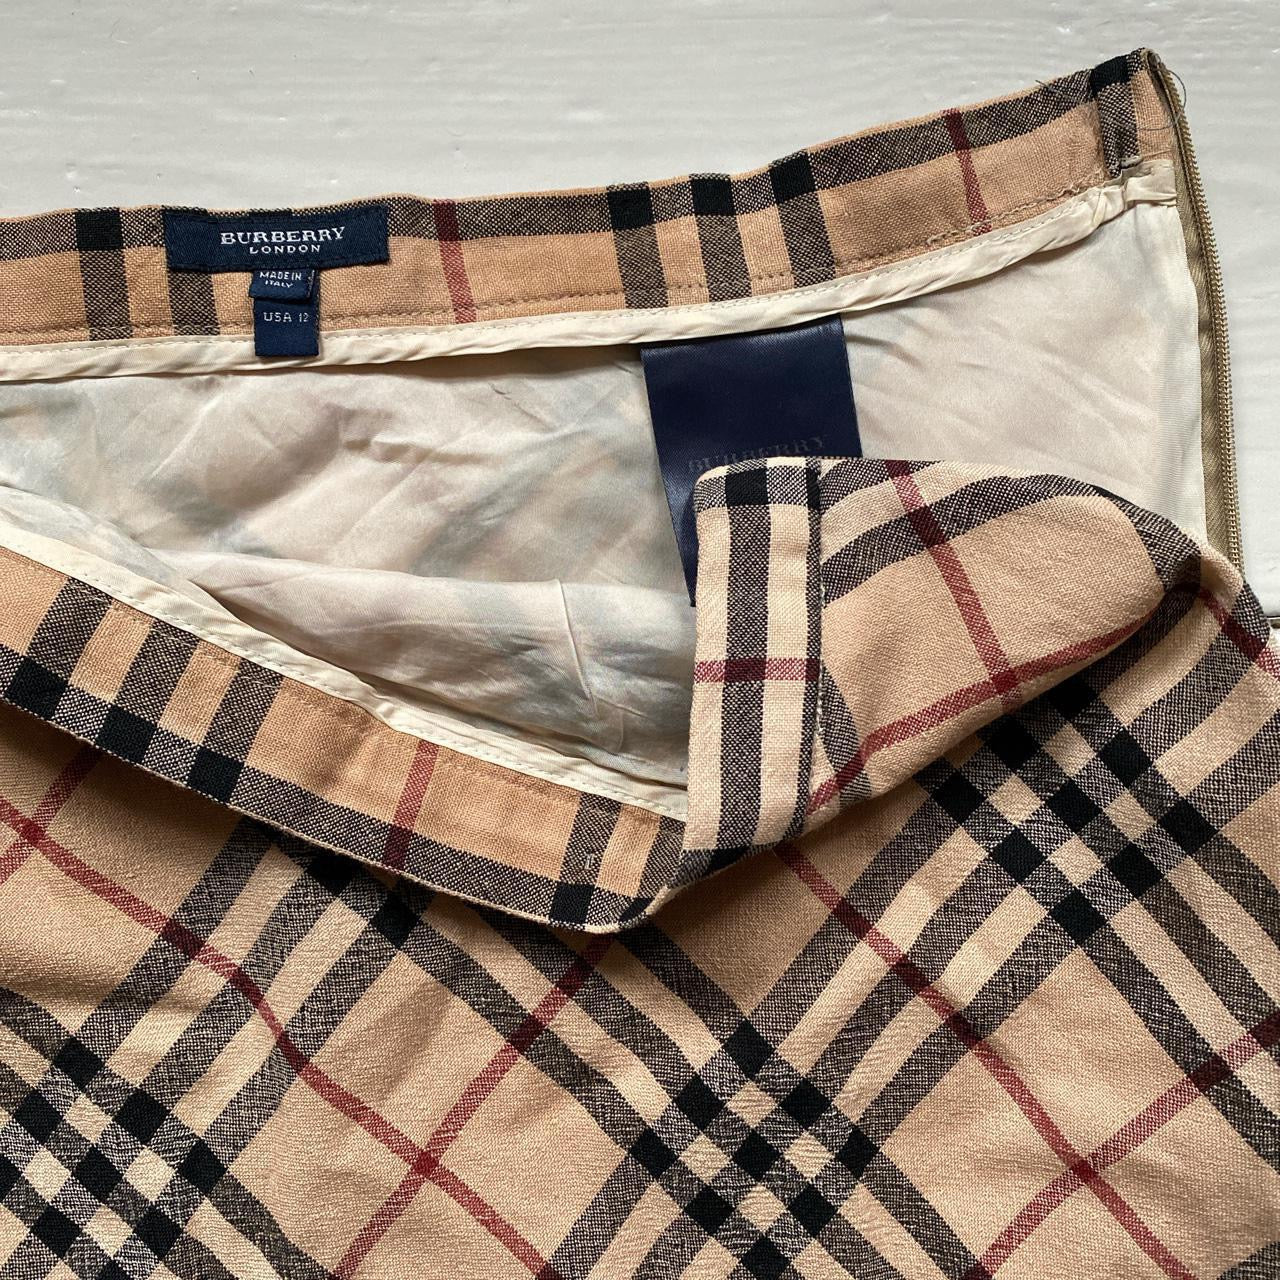 Burberry London Nova Check Maxi Skirt (US 12)